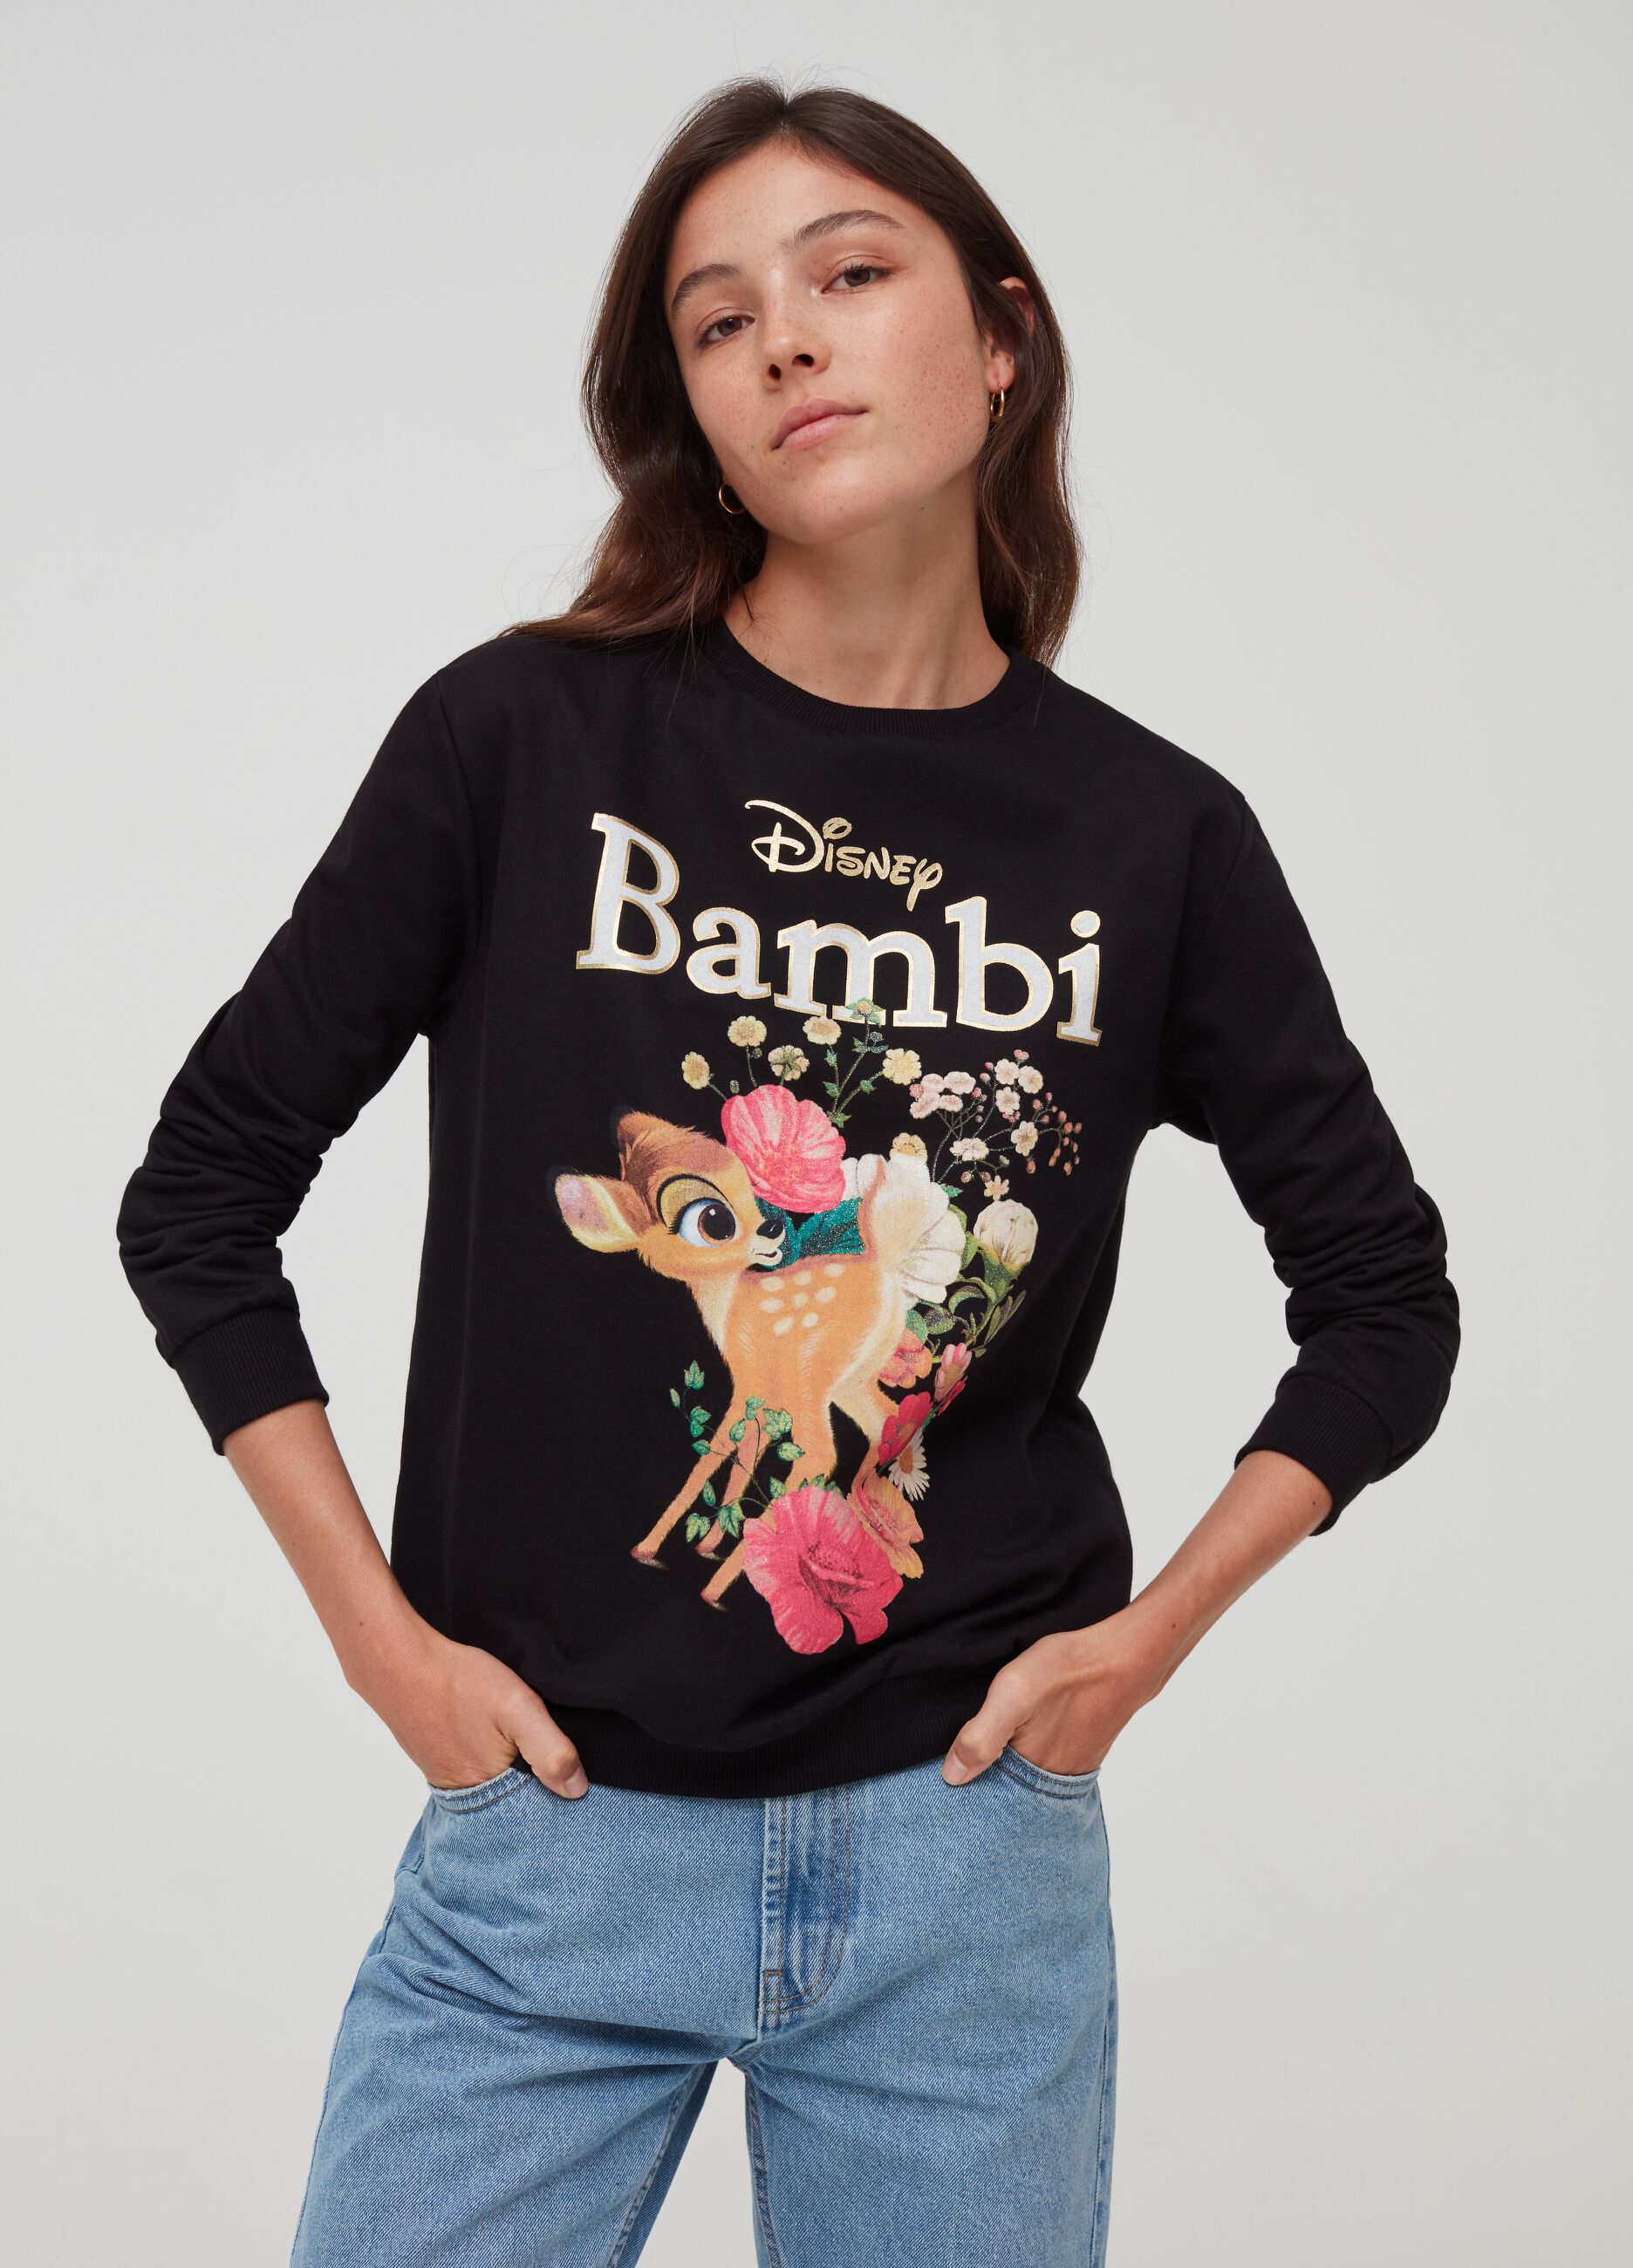 Disney Bambi sweatshirt in 100% cotton